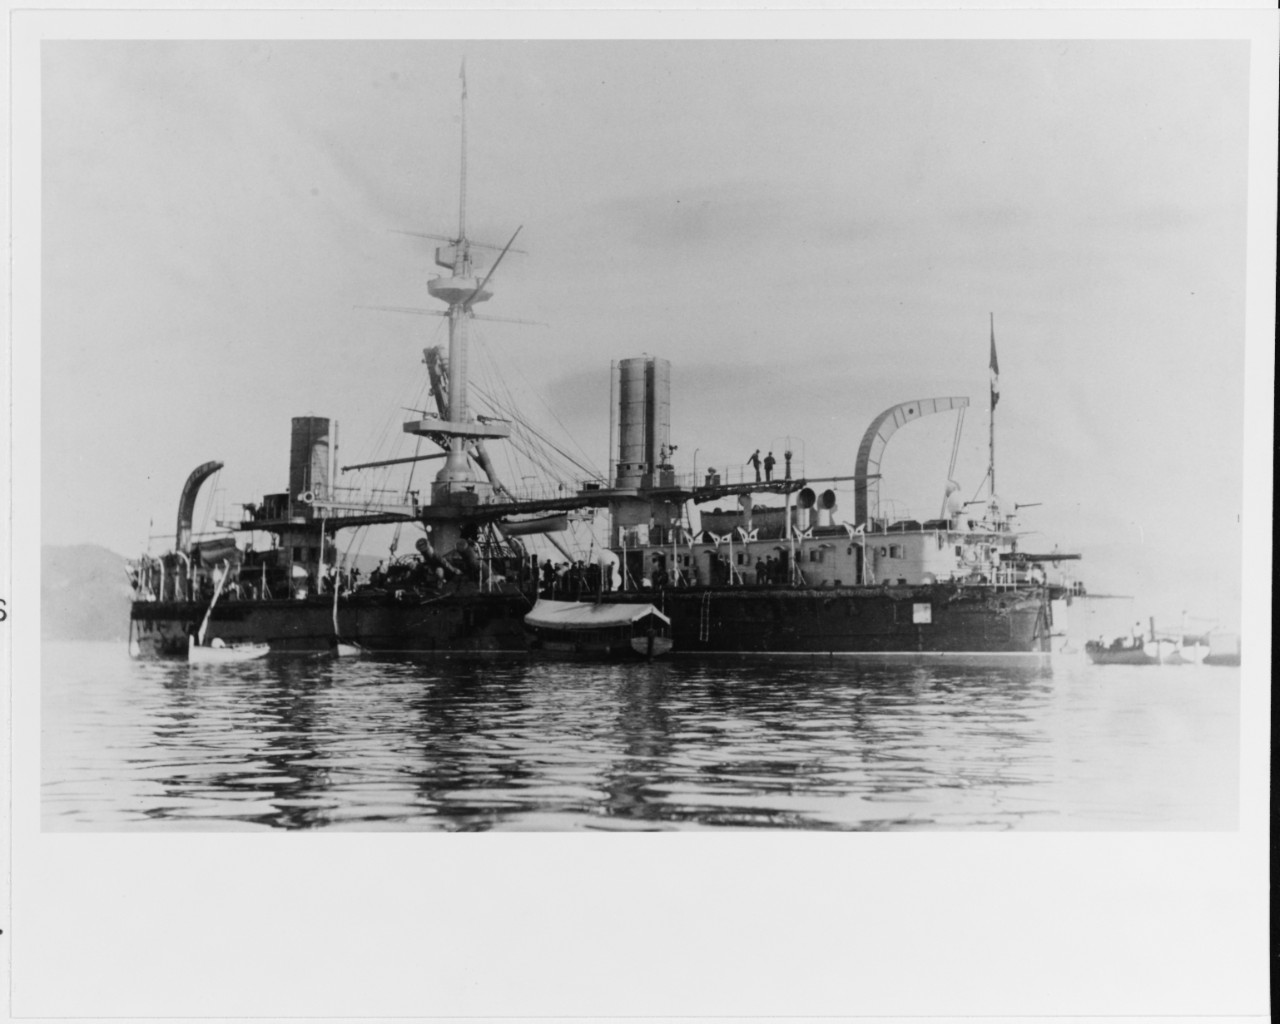 RUGGIERO DI LAURIA (Italian battleship, 1884-1909)